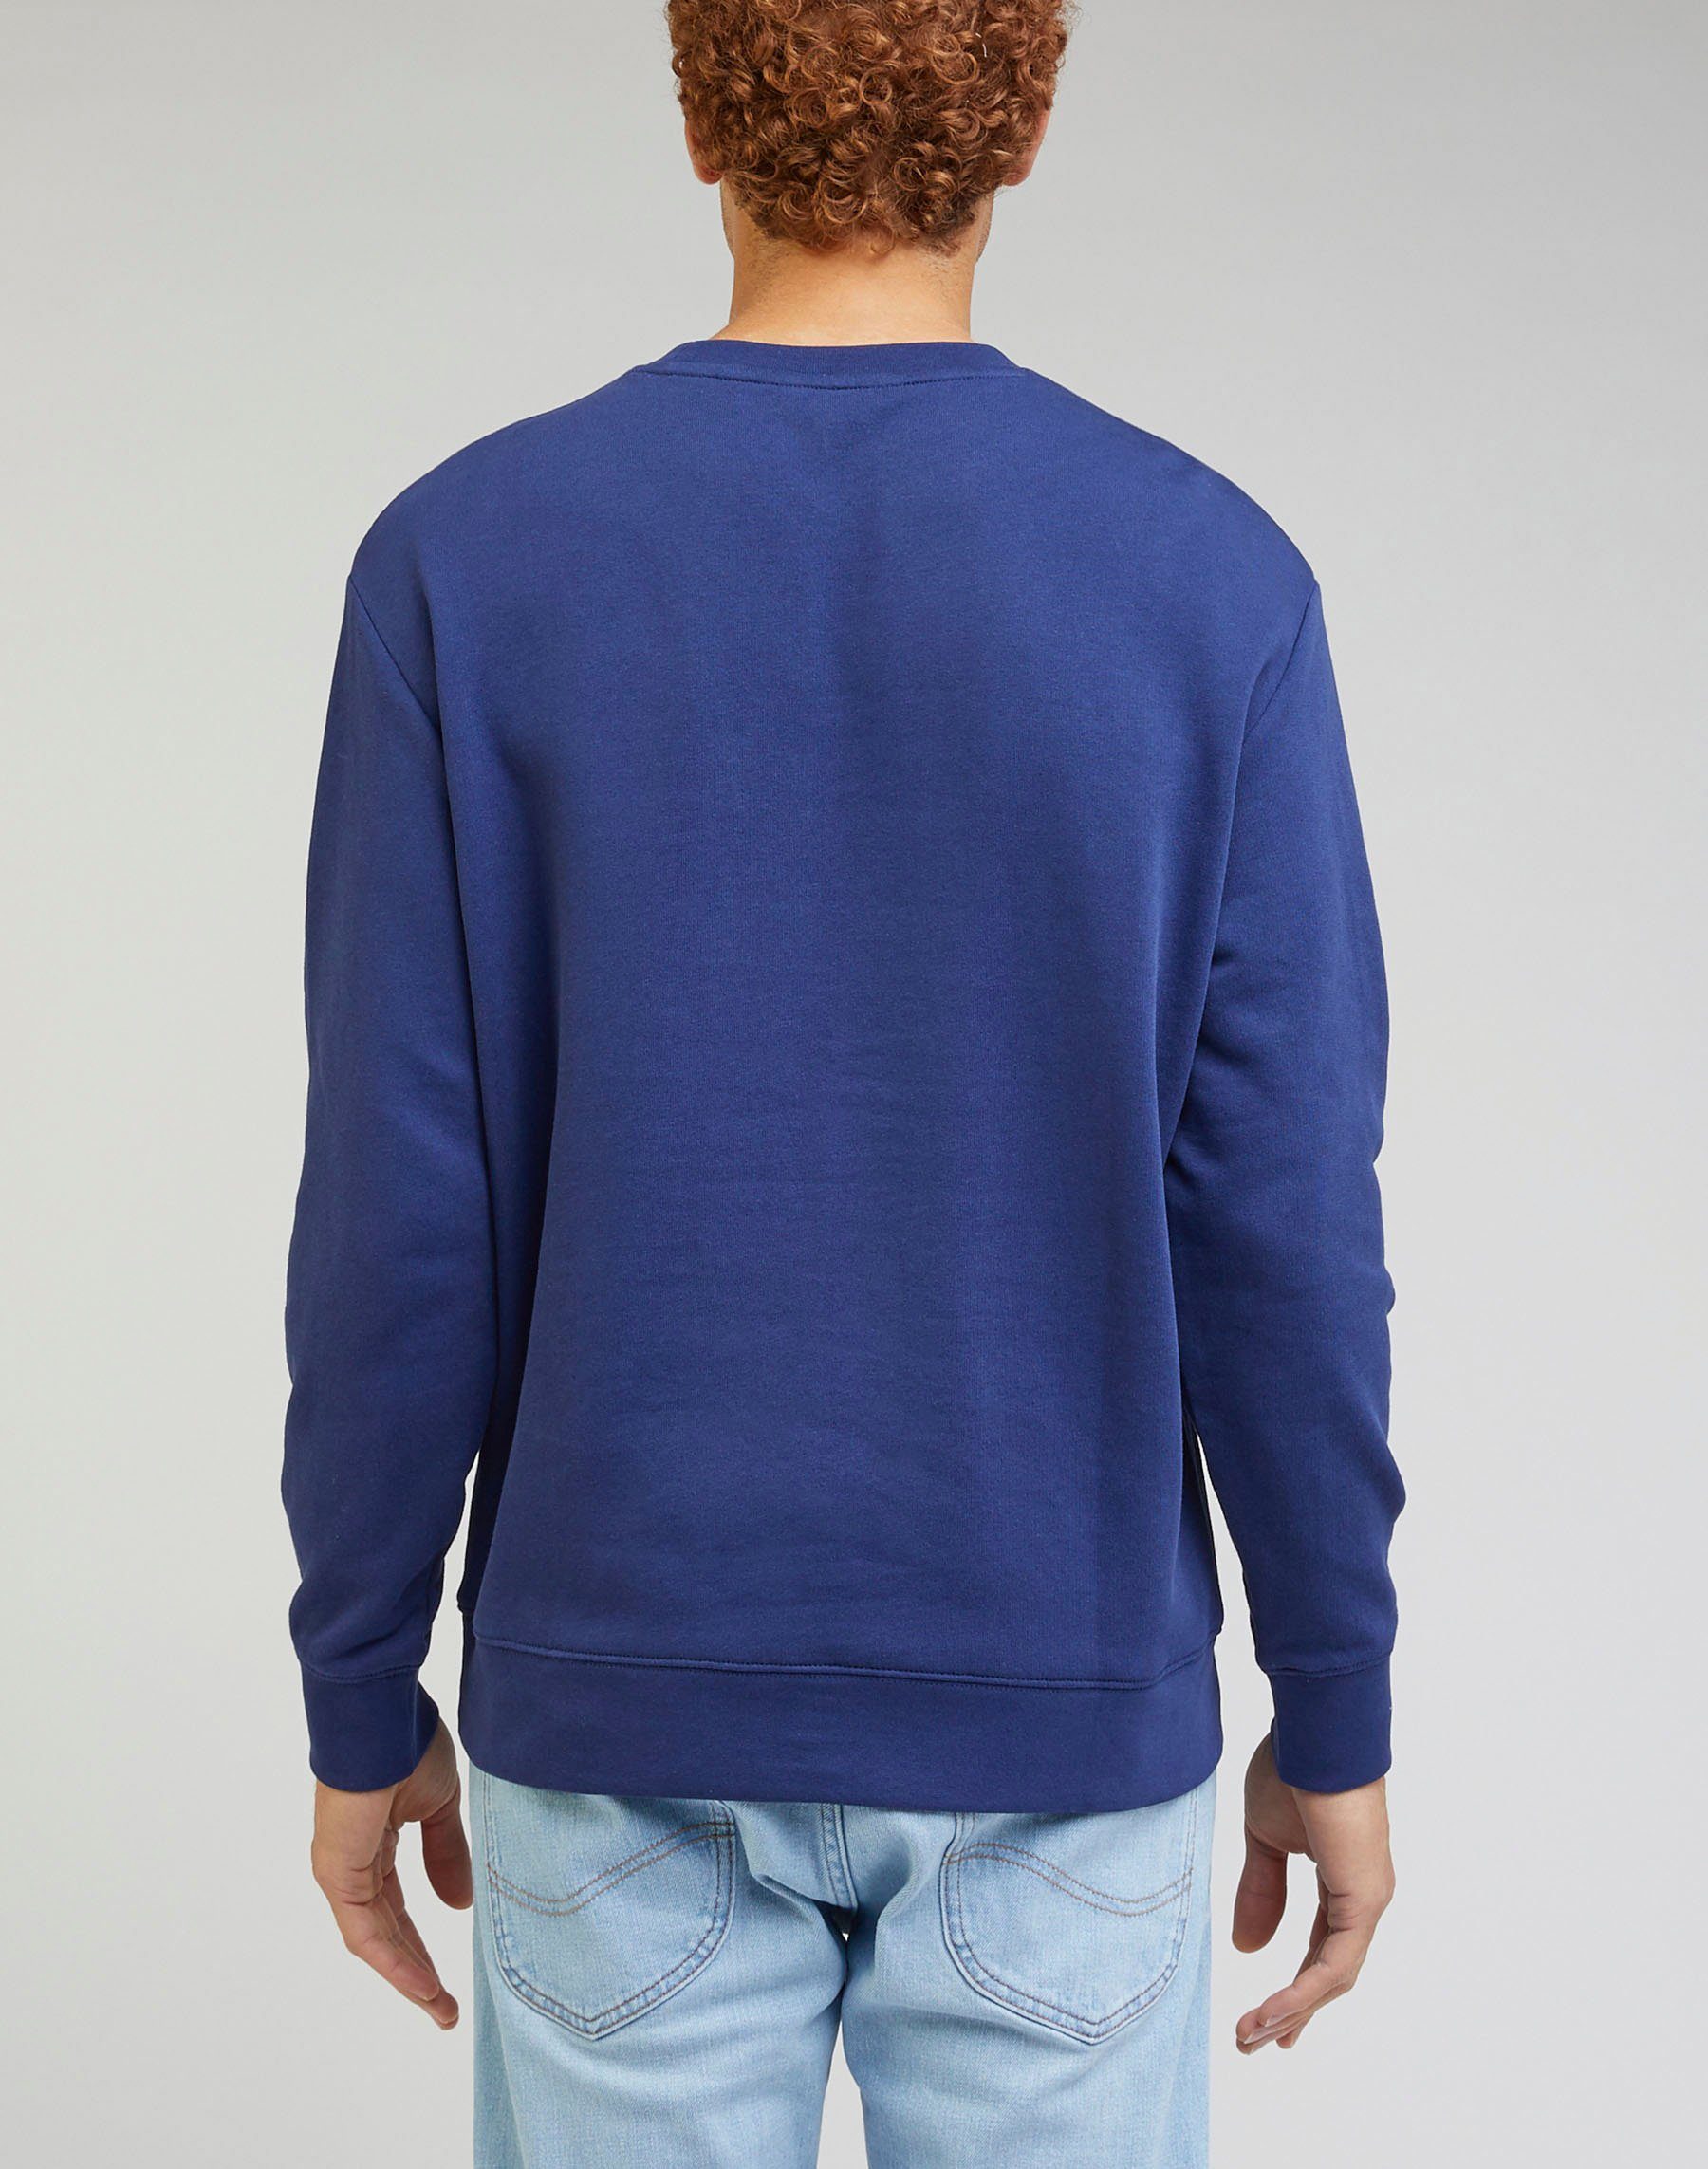 LEGENDARY Sweatshirt Lee® medieval blue DENIM CREW